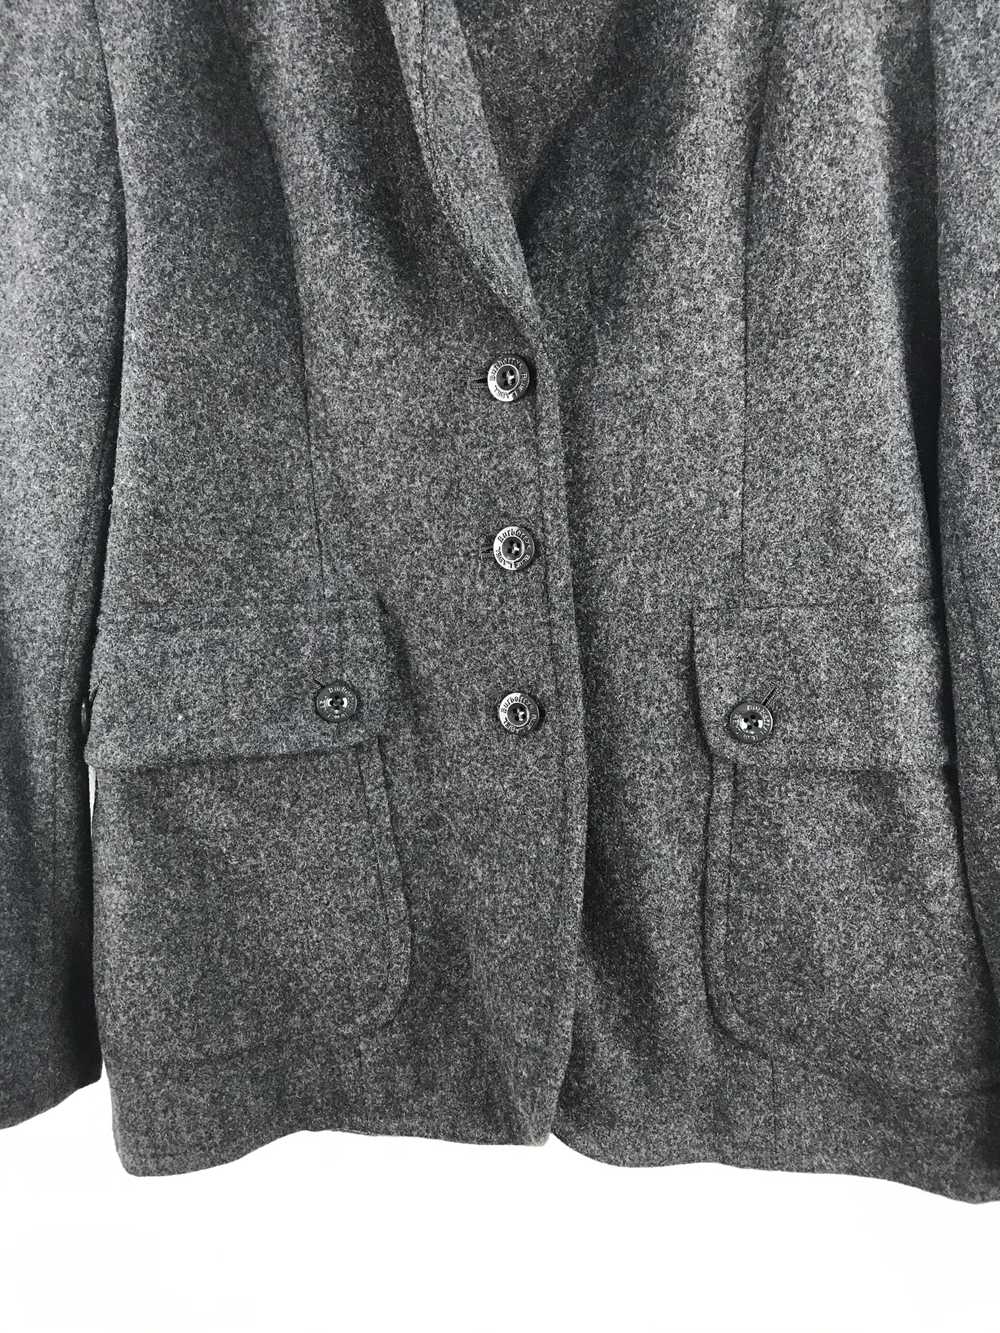 Burberry Blue Label Wool Jacket - image 6